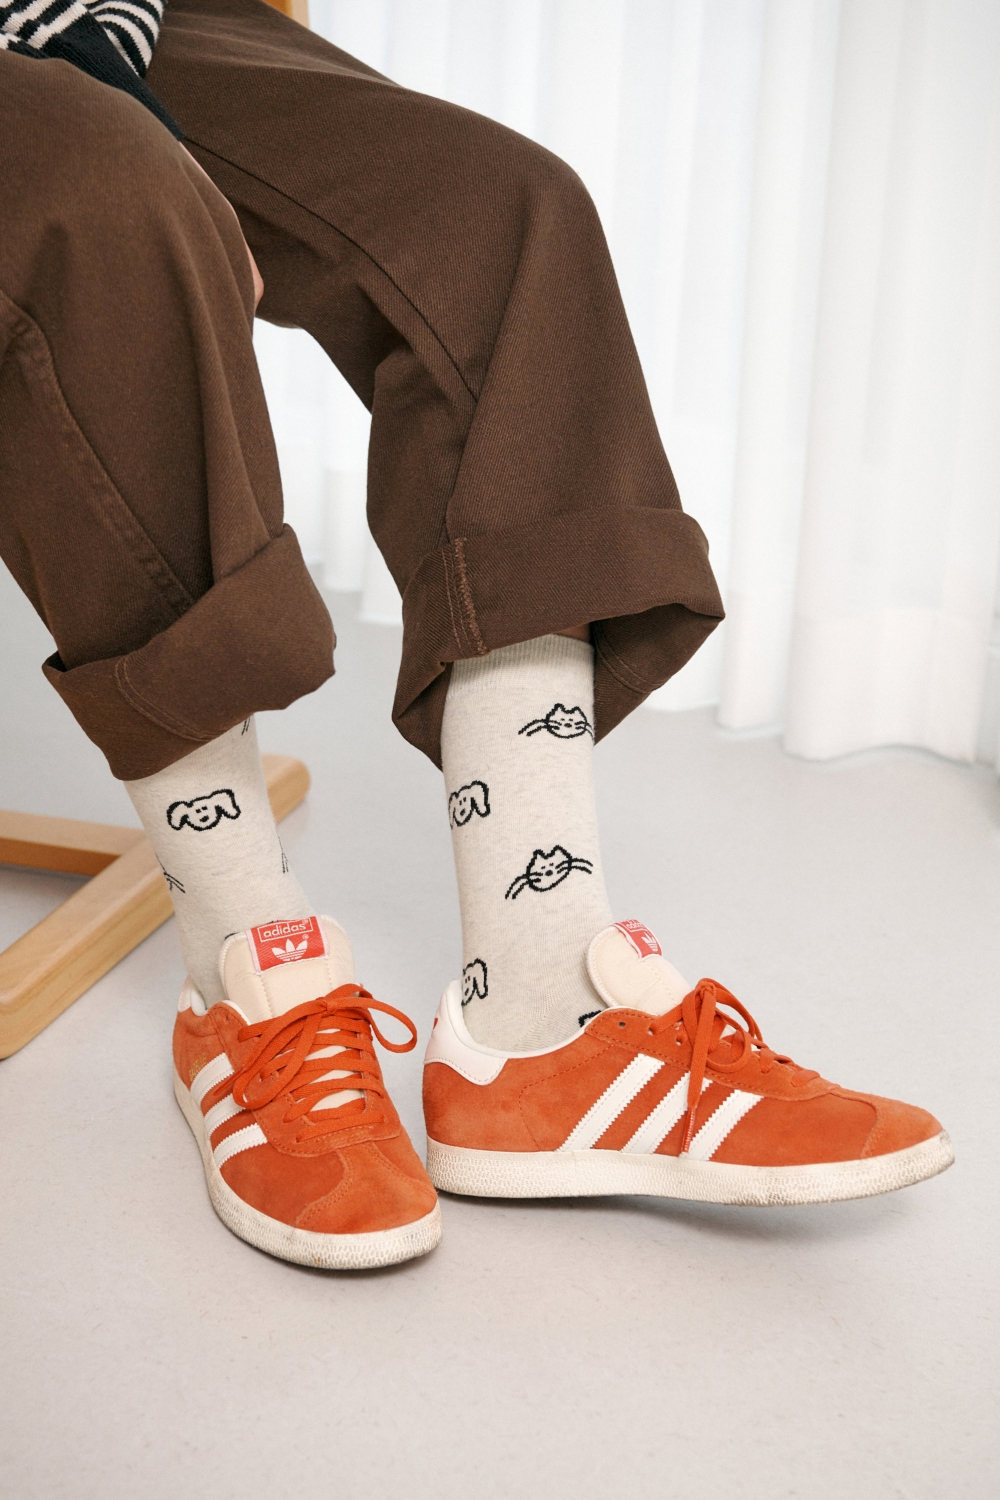 socks product image-S2L1